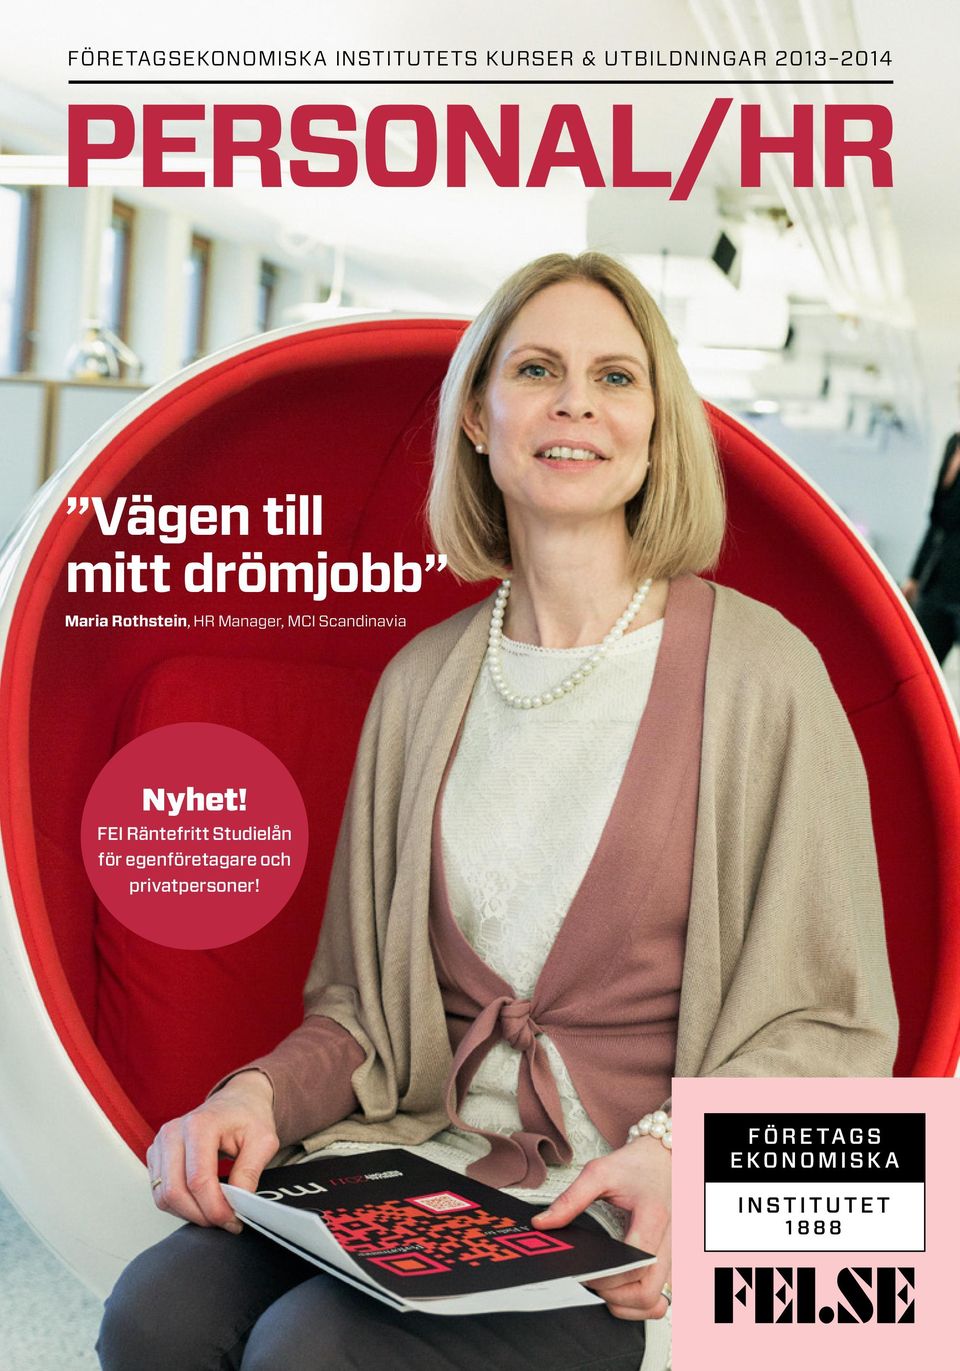 Rothstein, HR Manager, MCI Scandinavia Nyhet!